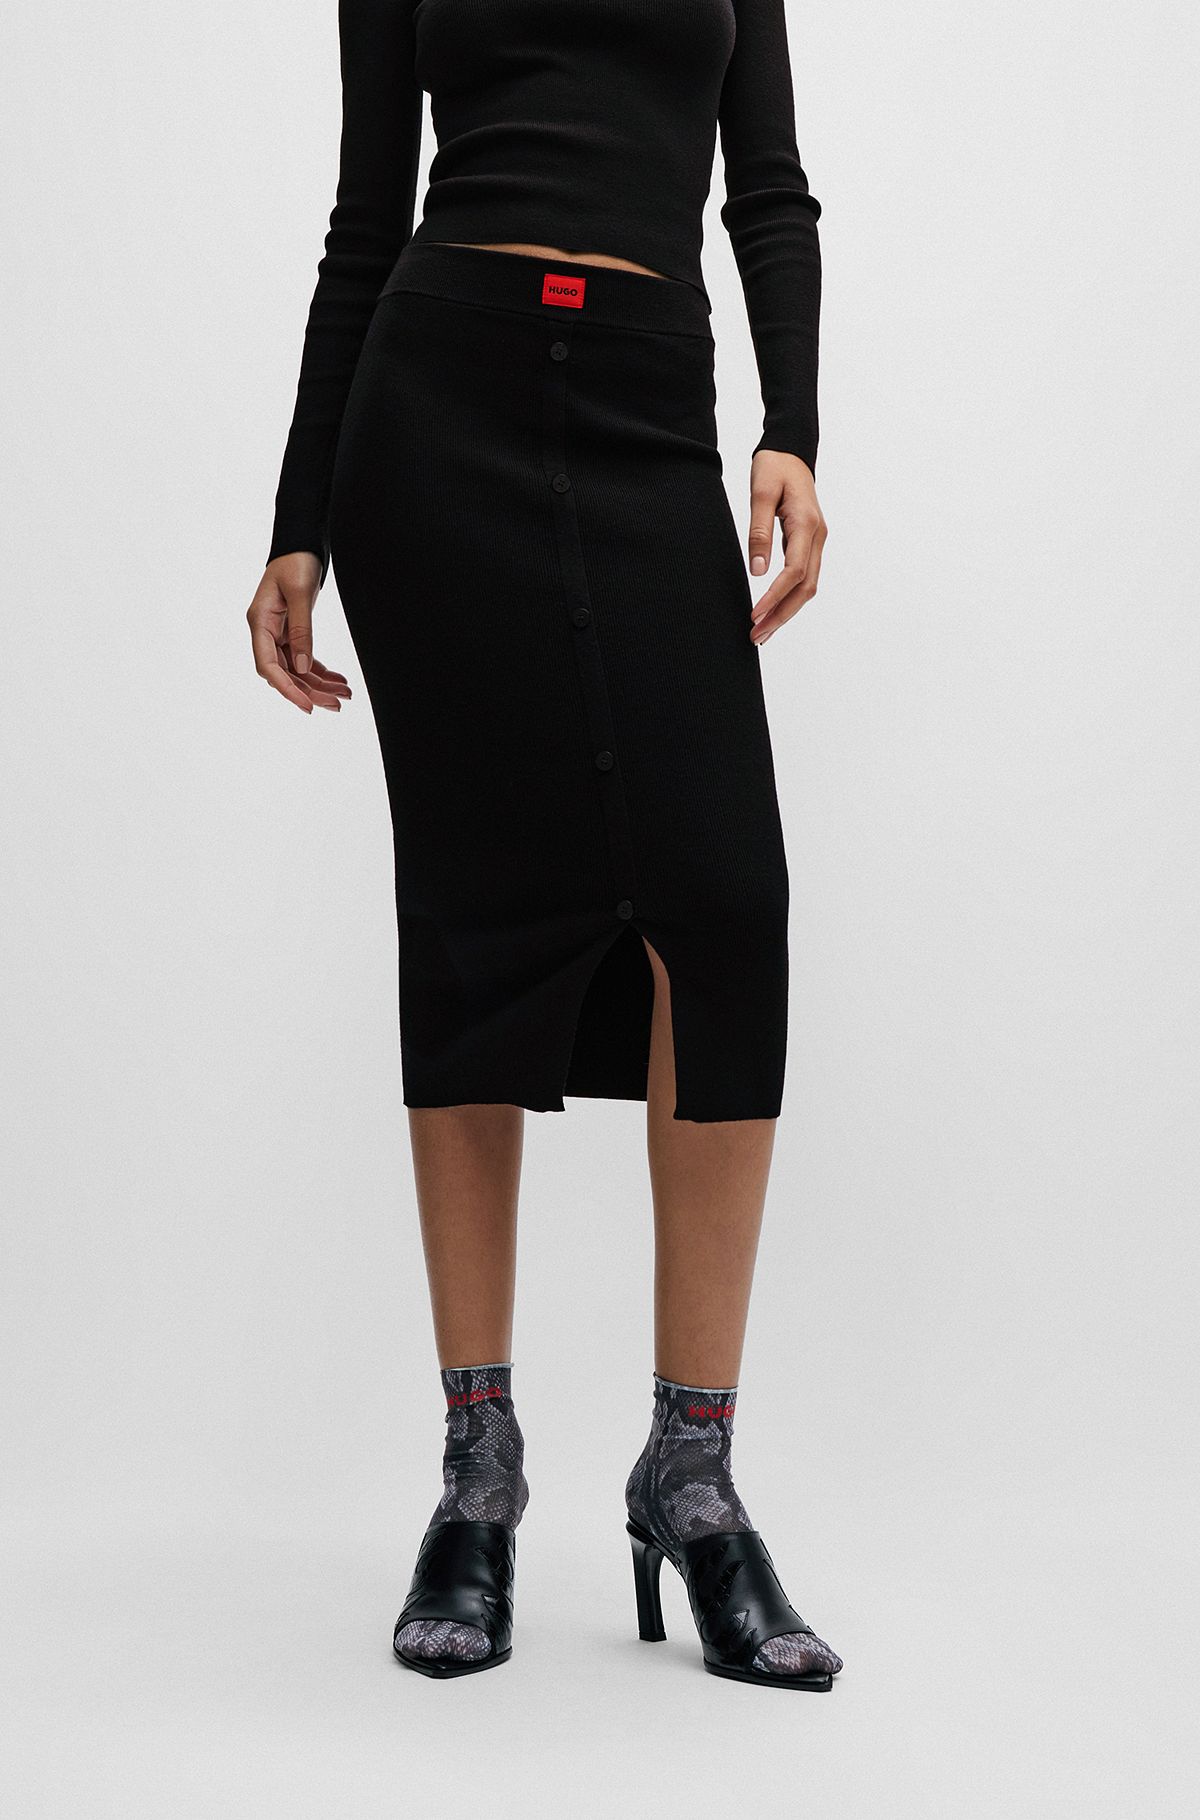 HUGO BOSS | Röcke für Design Modernes Damen 